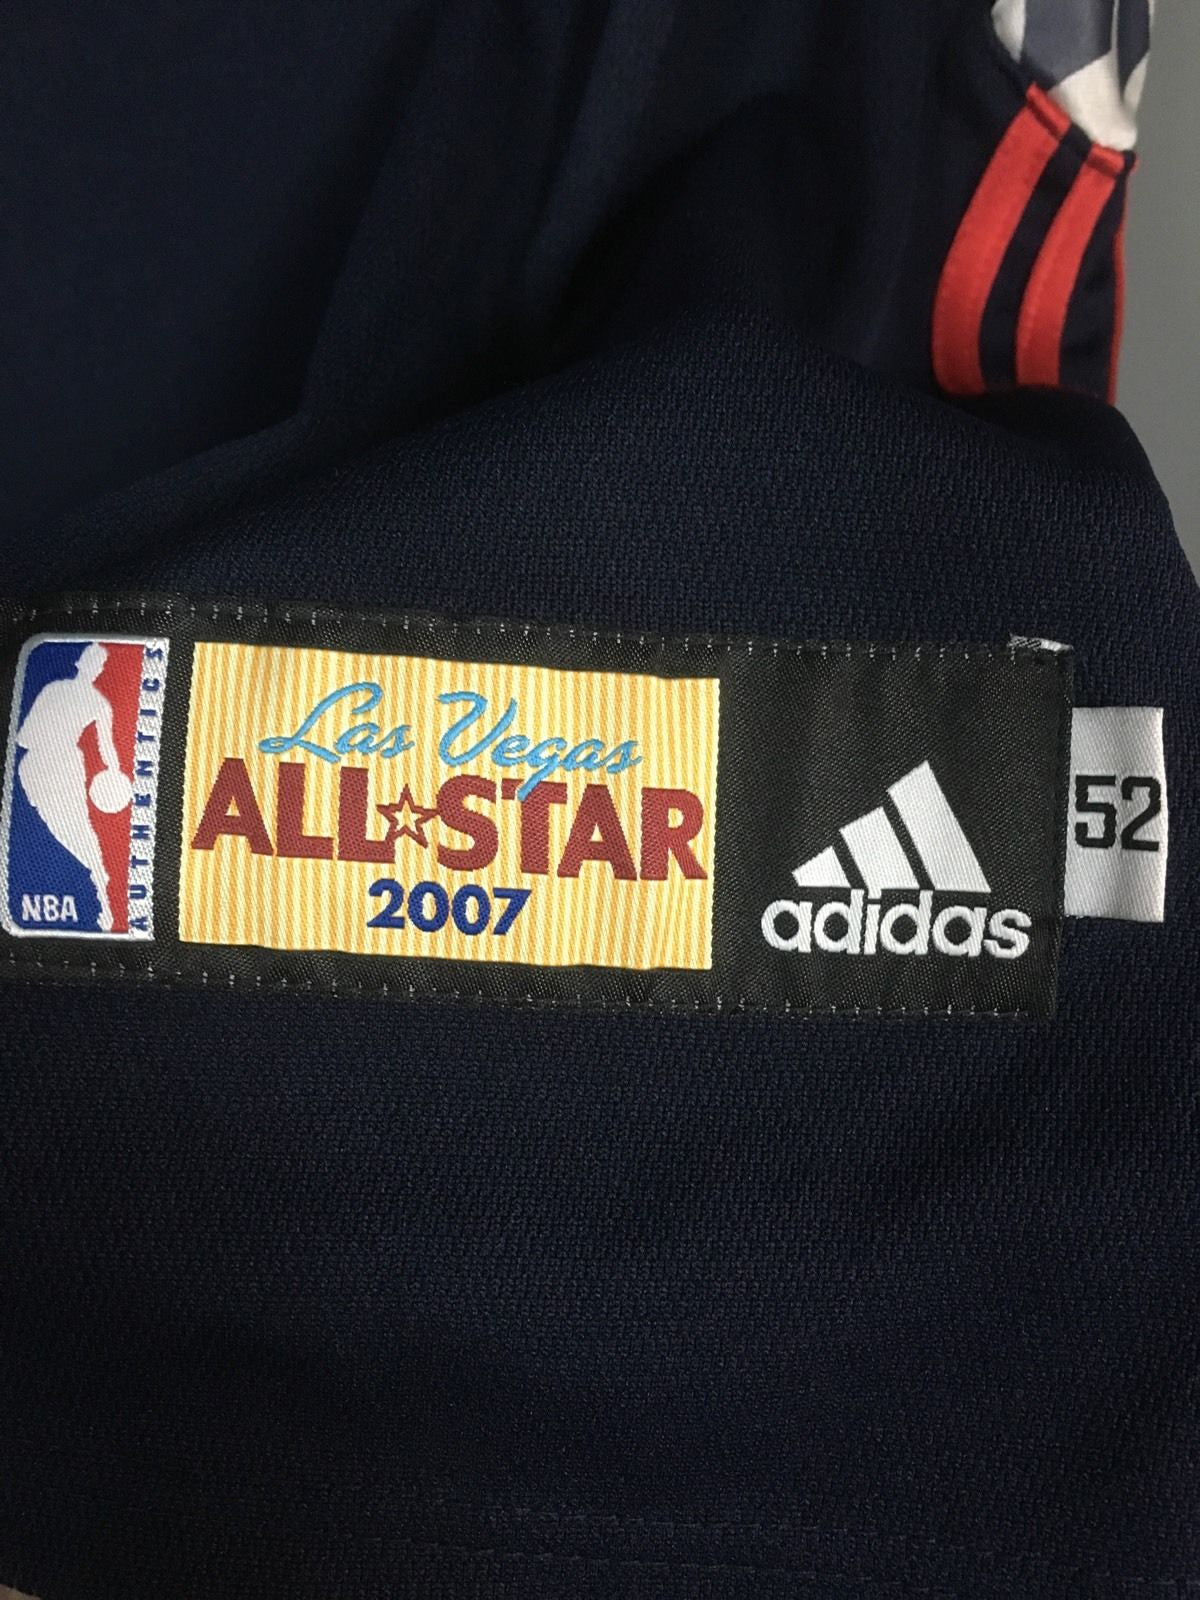 Adidas NBA 2007 All Star Lebron James Jersey